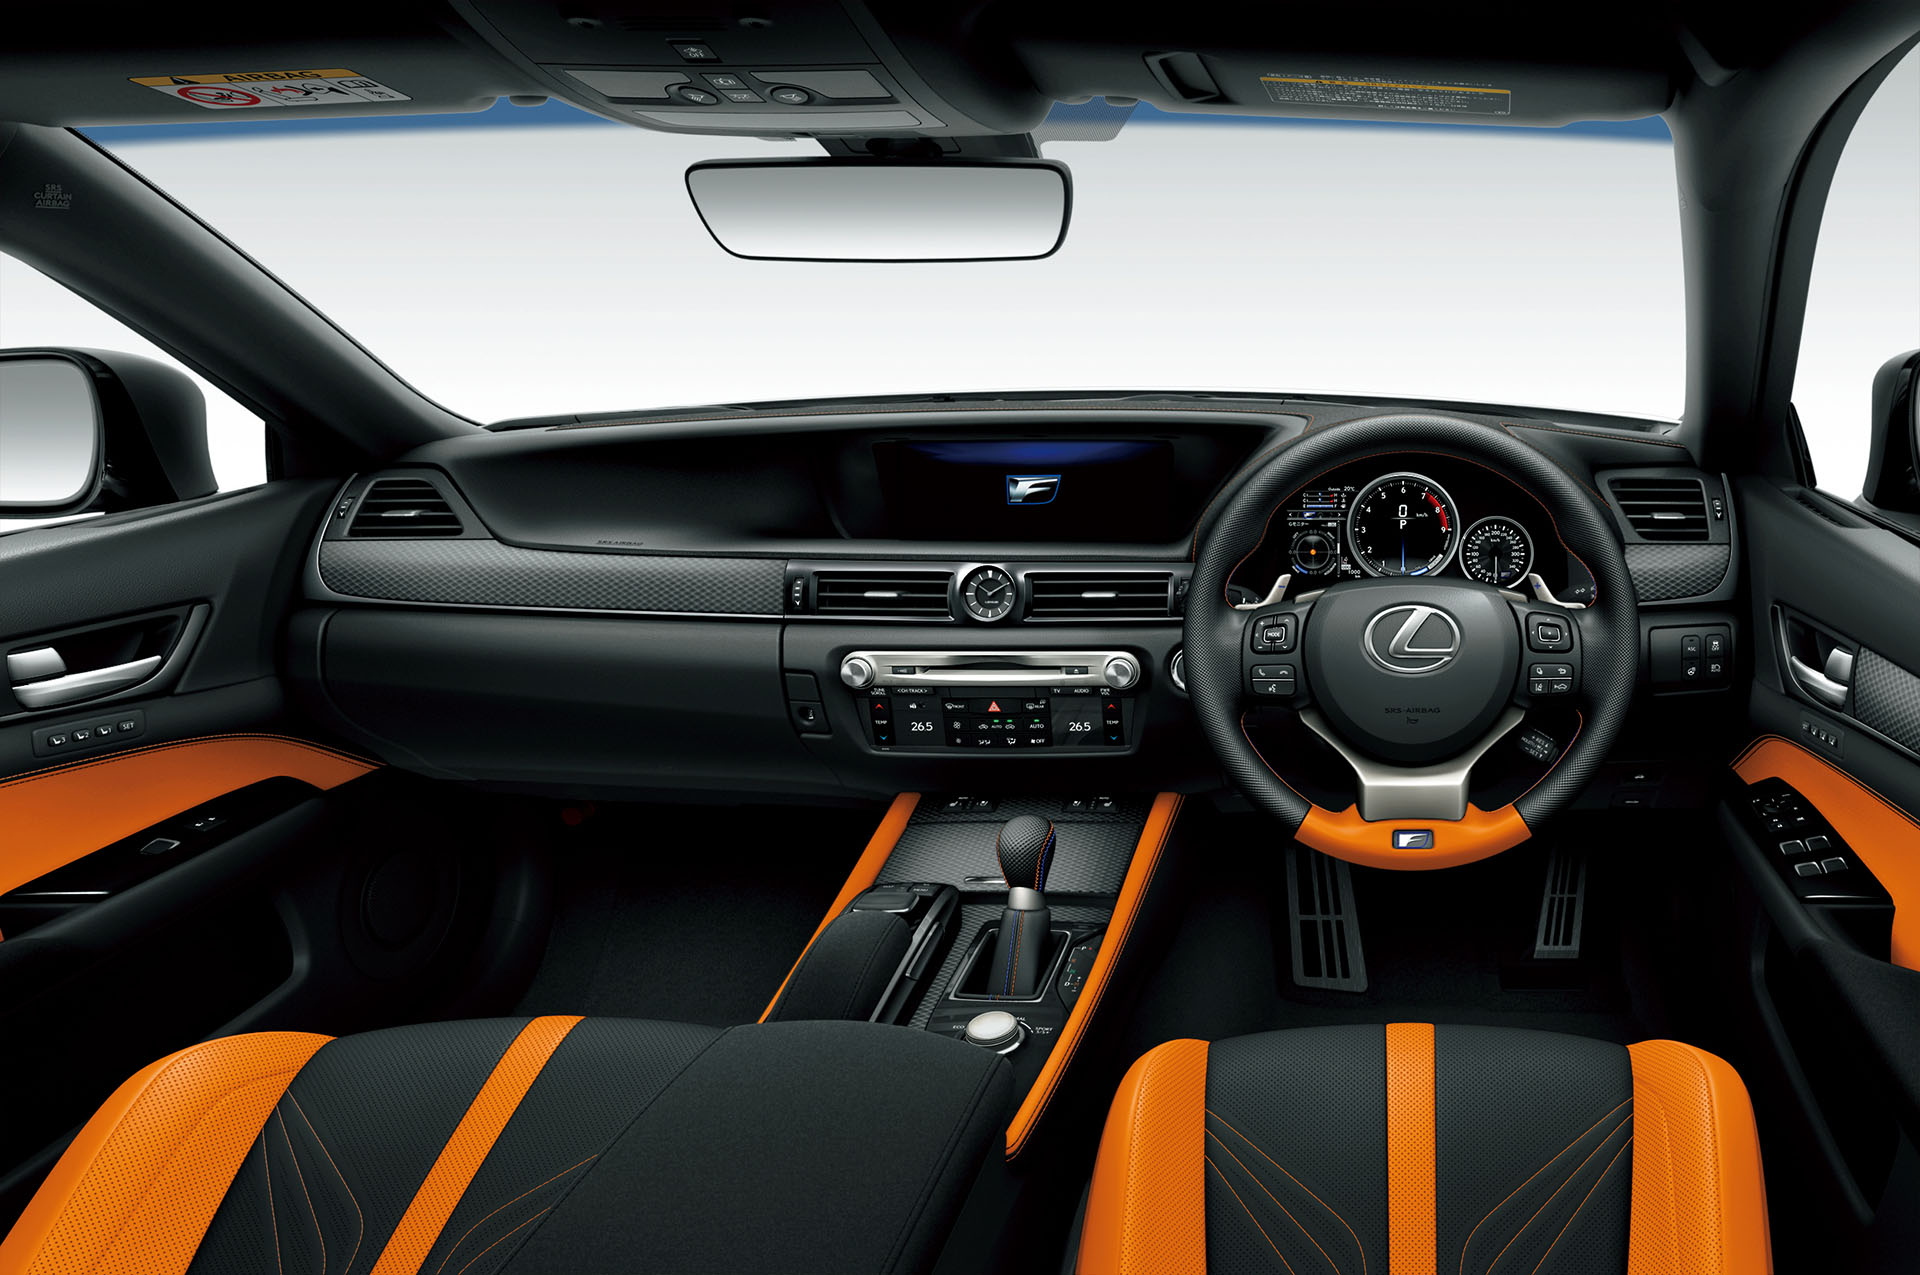 GS F (Black and Accent Orange interior color; options shown)